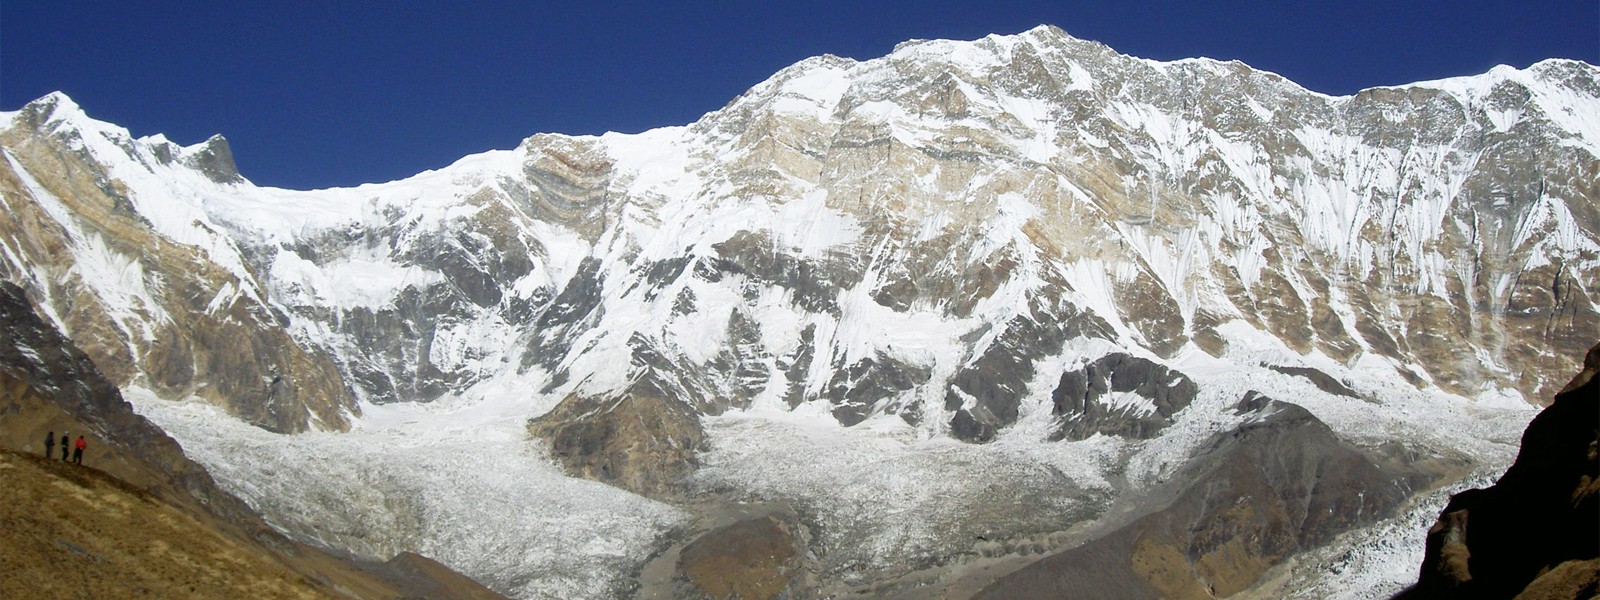 Mount Annapurna South Expedition in Annapurna Region